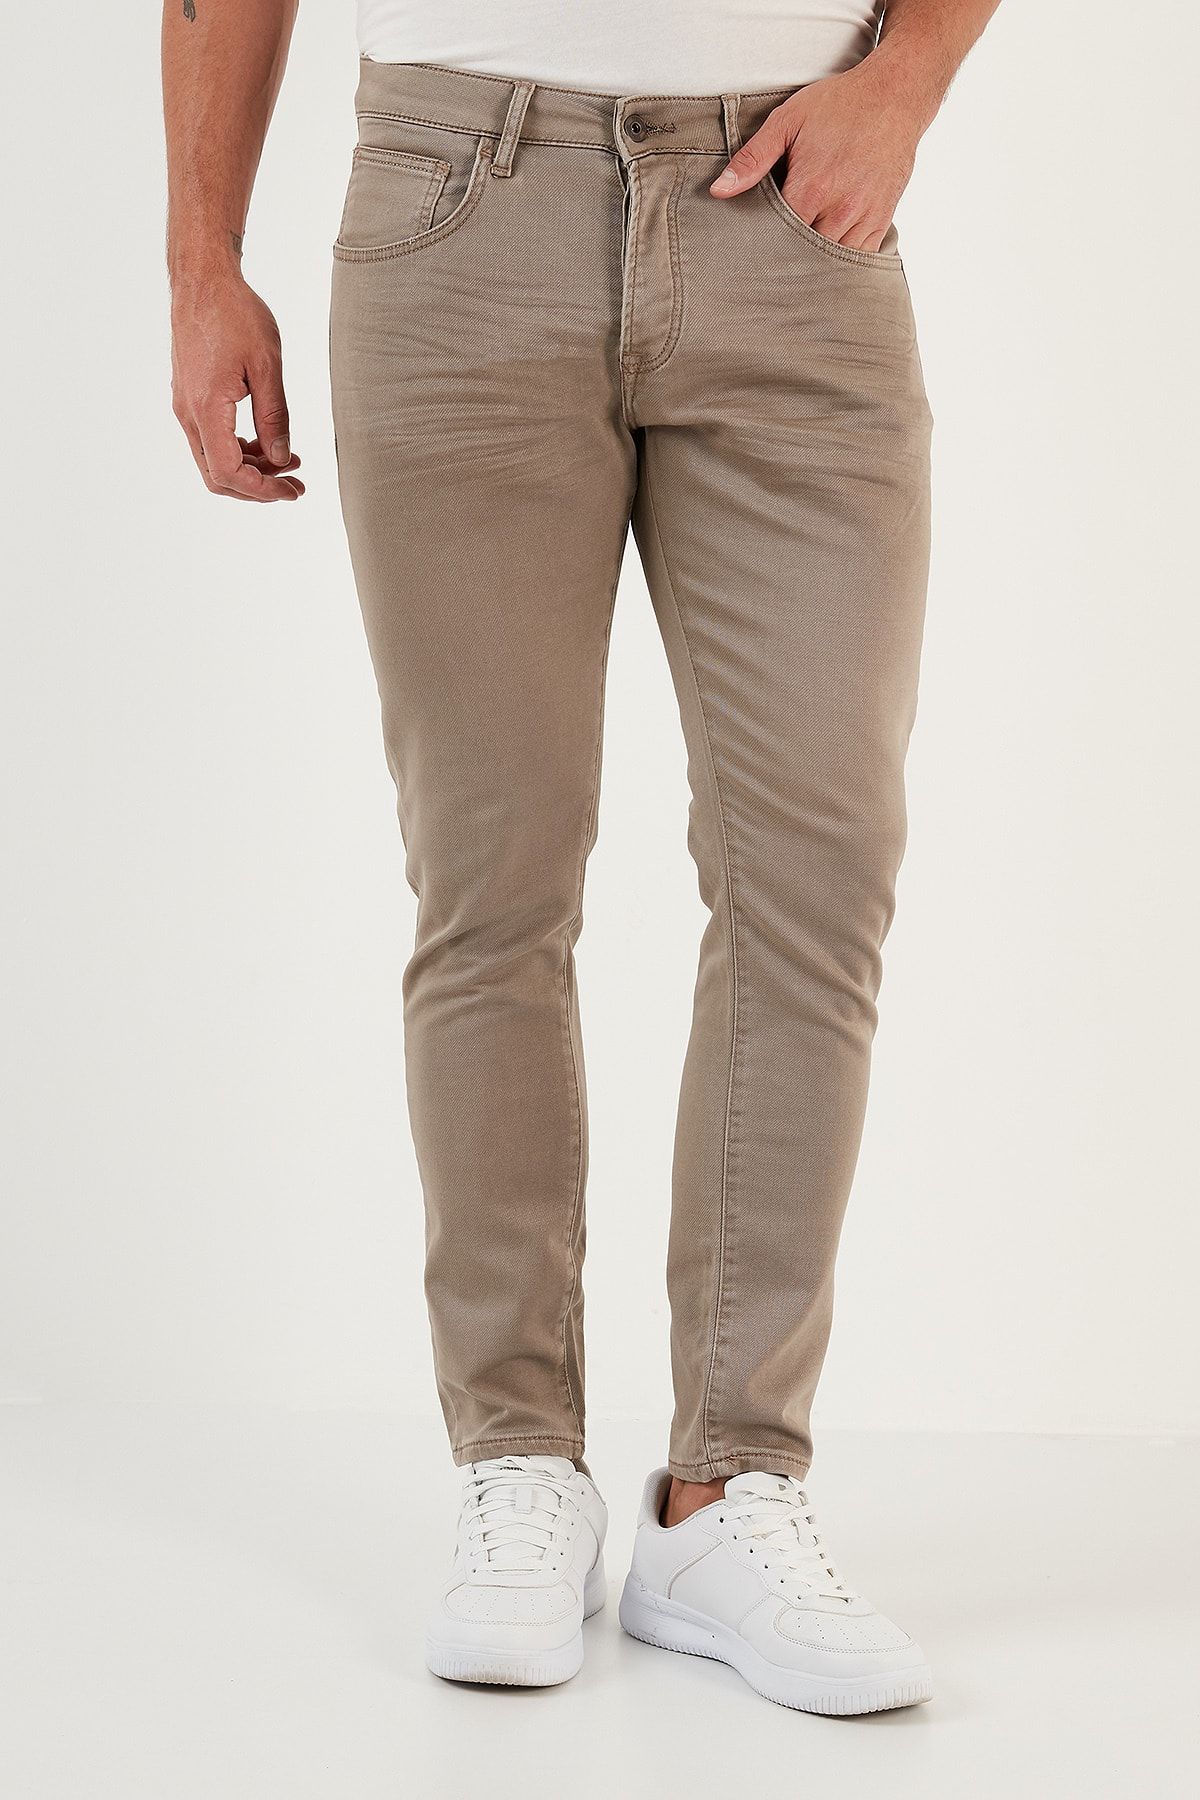 Buratti Pamuklu Normal Bel Dar Paça Slim Fit Jeans Erkek Kot Pantolon 1114d02napolı